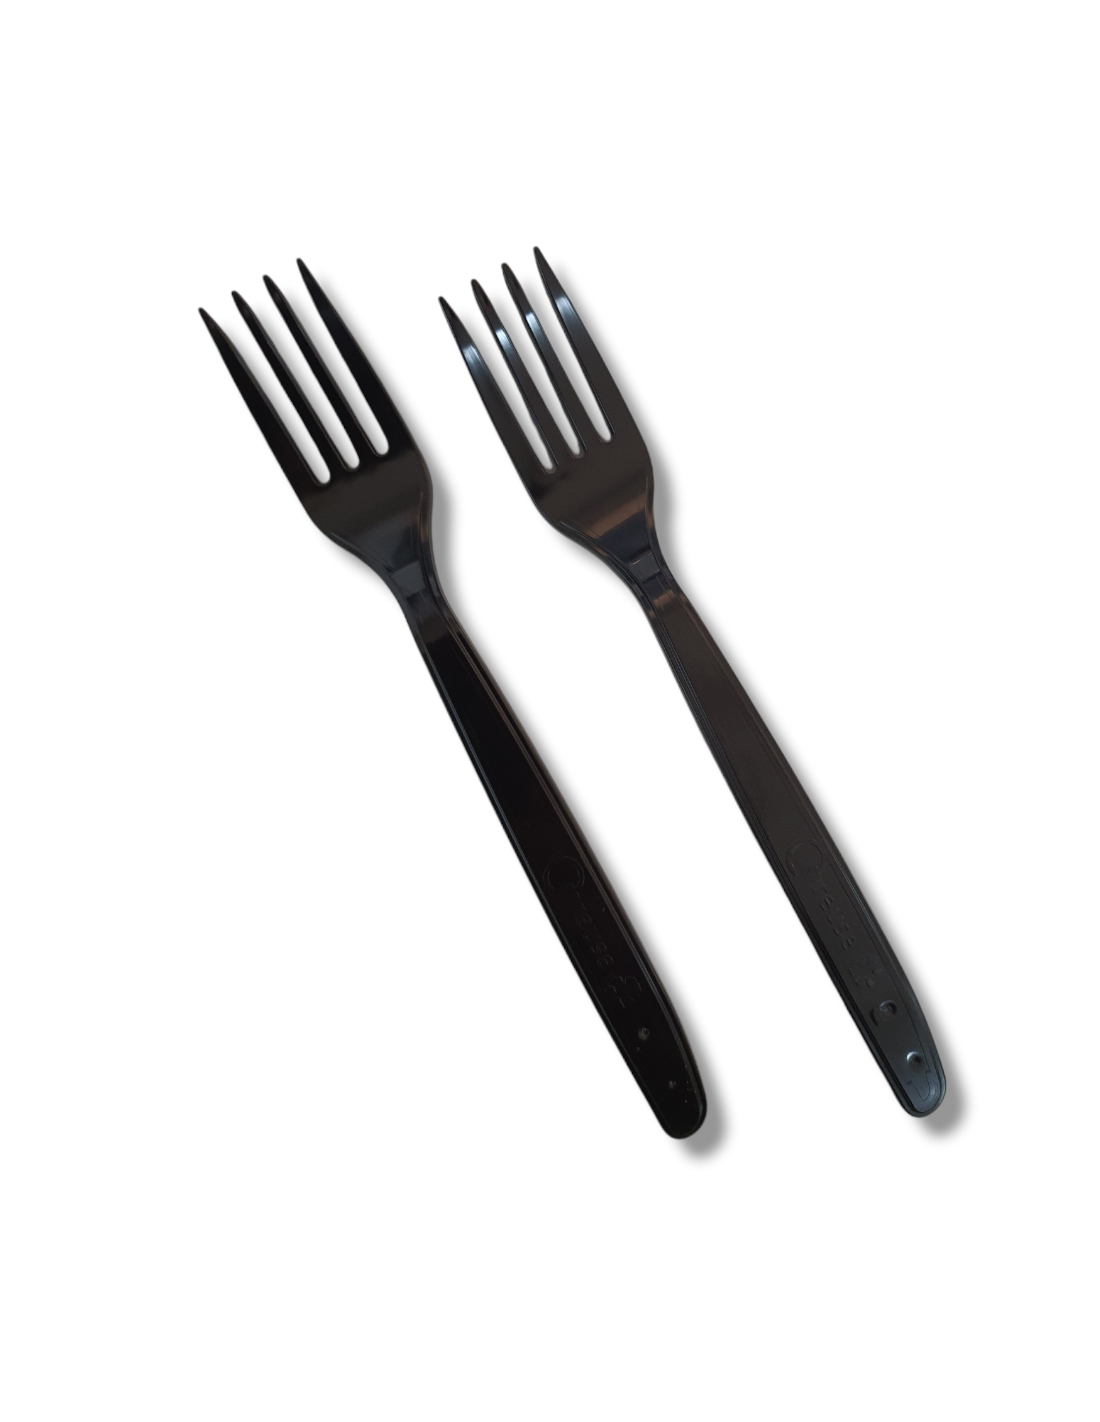 Tenedores de plástico reutilizables PS color negro 18,5 cm